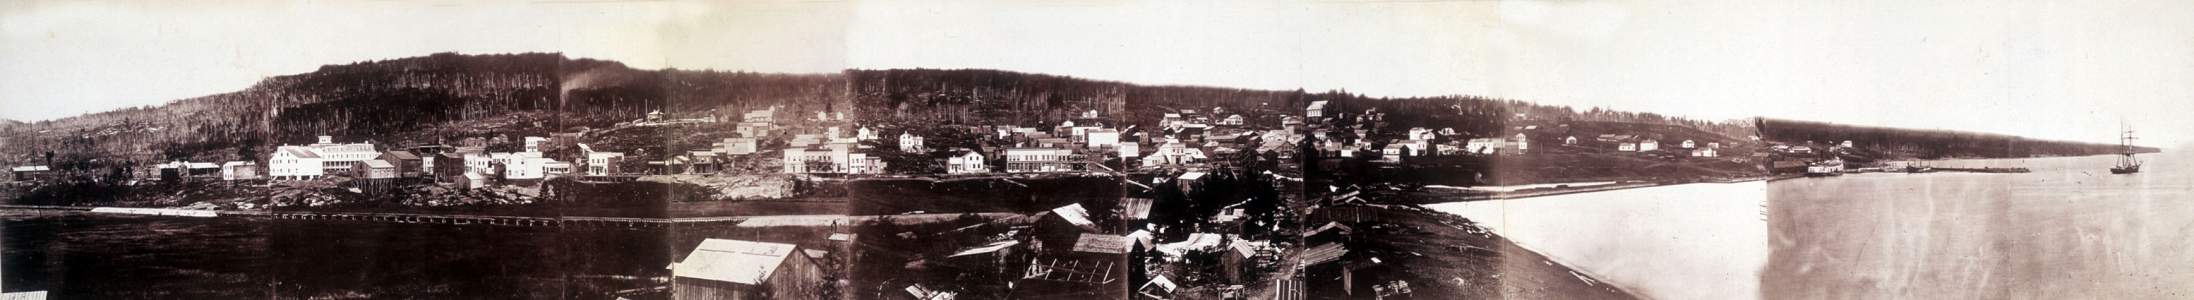 Duluth, Minnesota, 1870, panoramic photograph, zoomable image